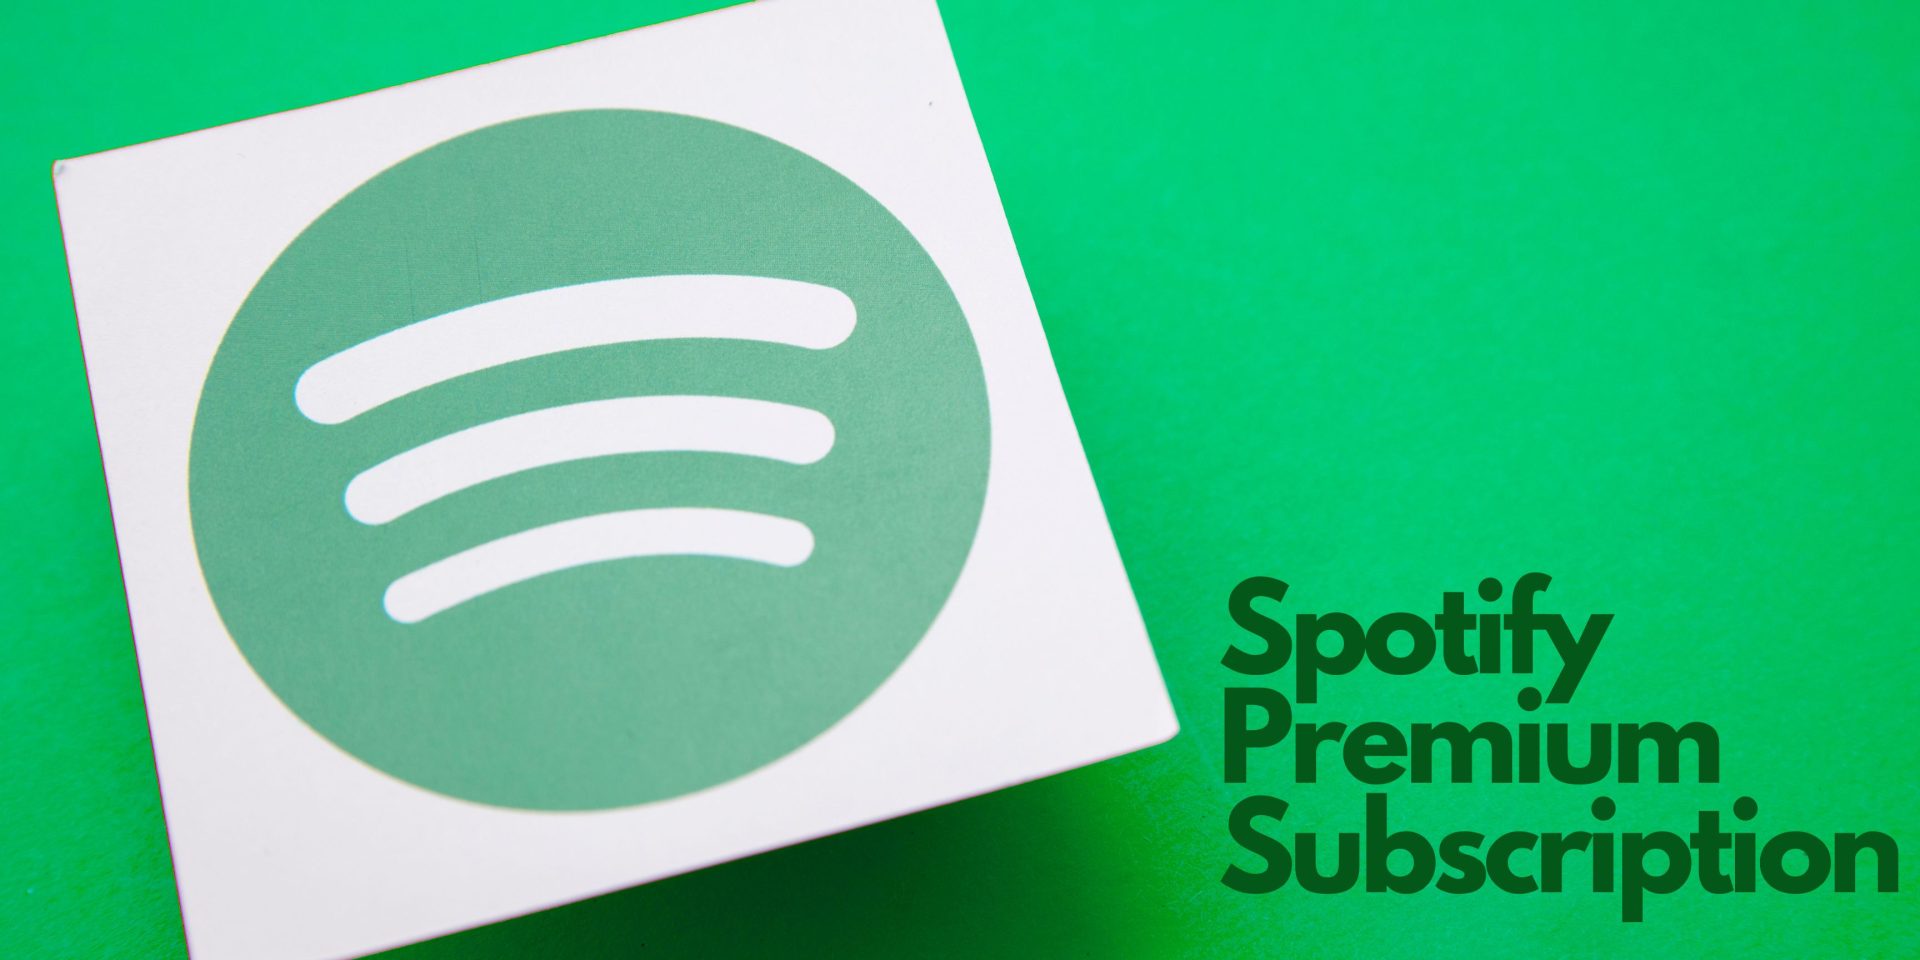 Spotify Raises Premium Subscription